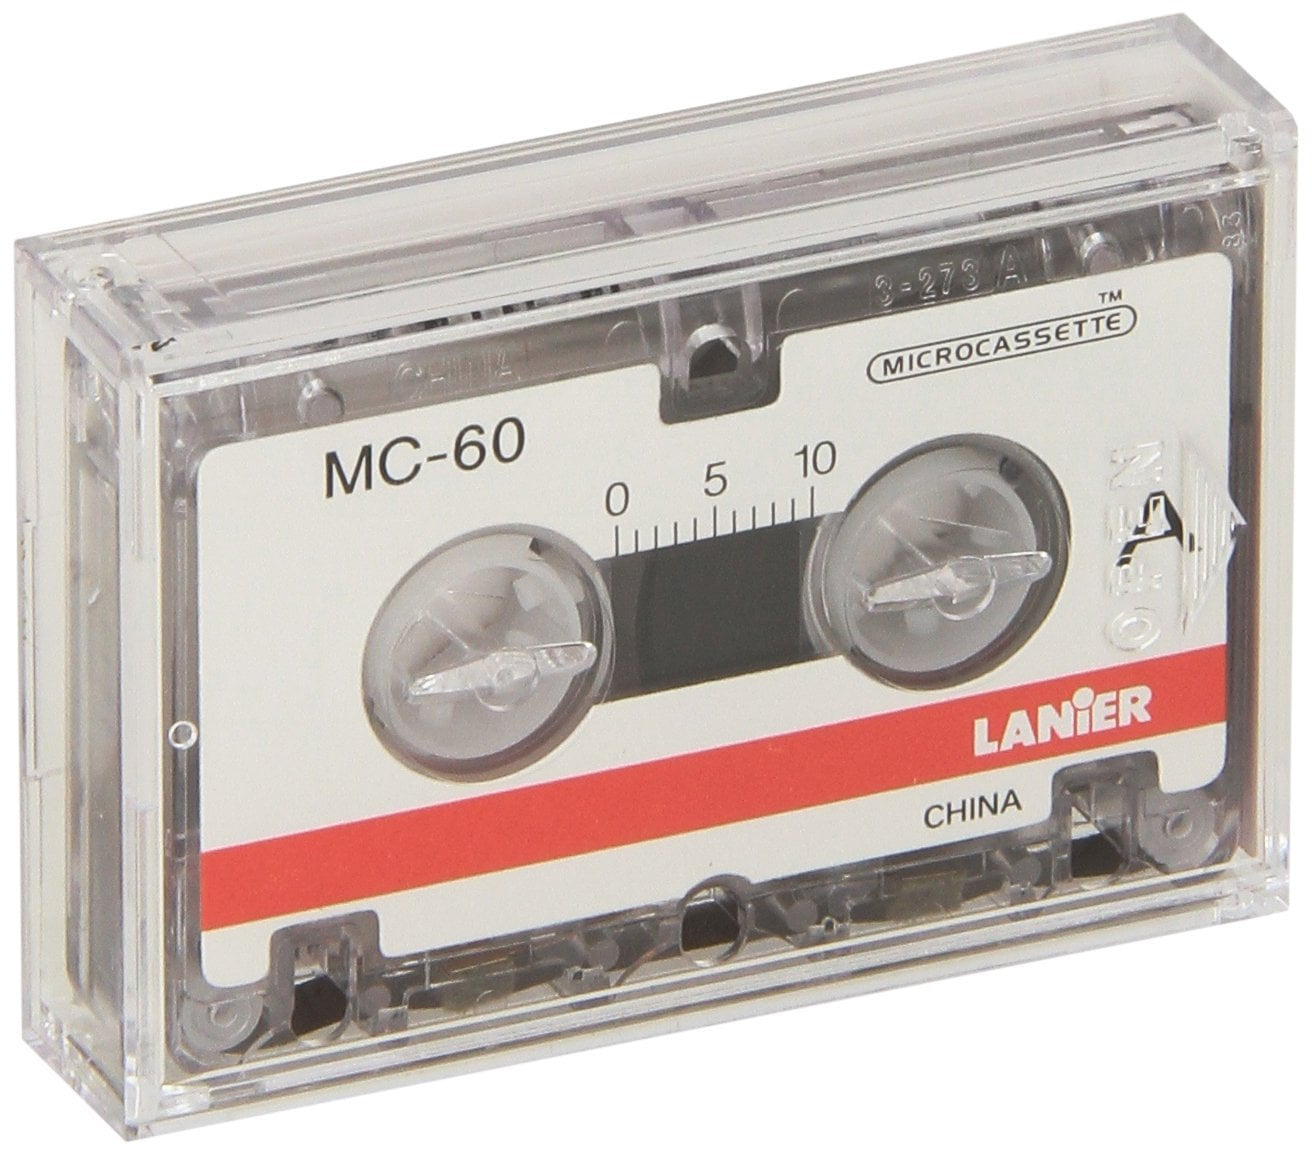 W/Case NEW VINTAGE Lanier MC-60 Blank Microcassette Tapes Lot of 5